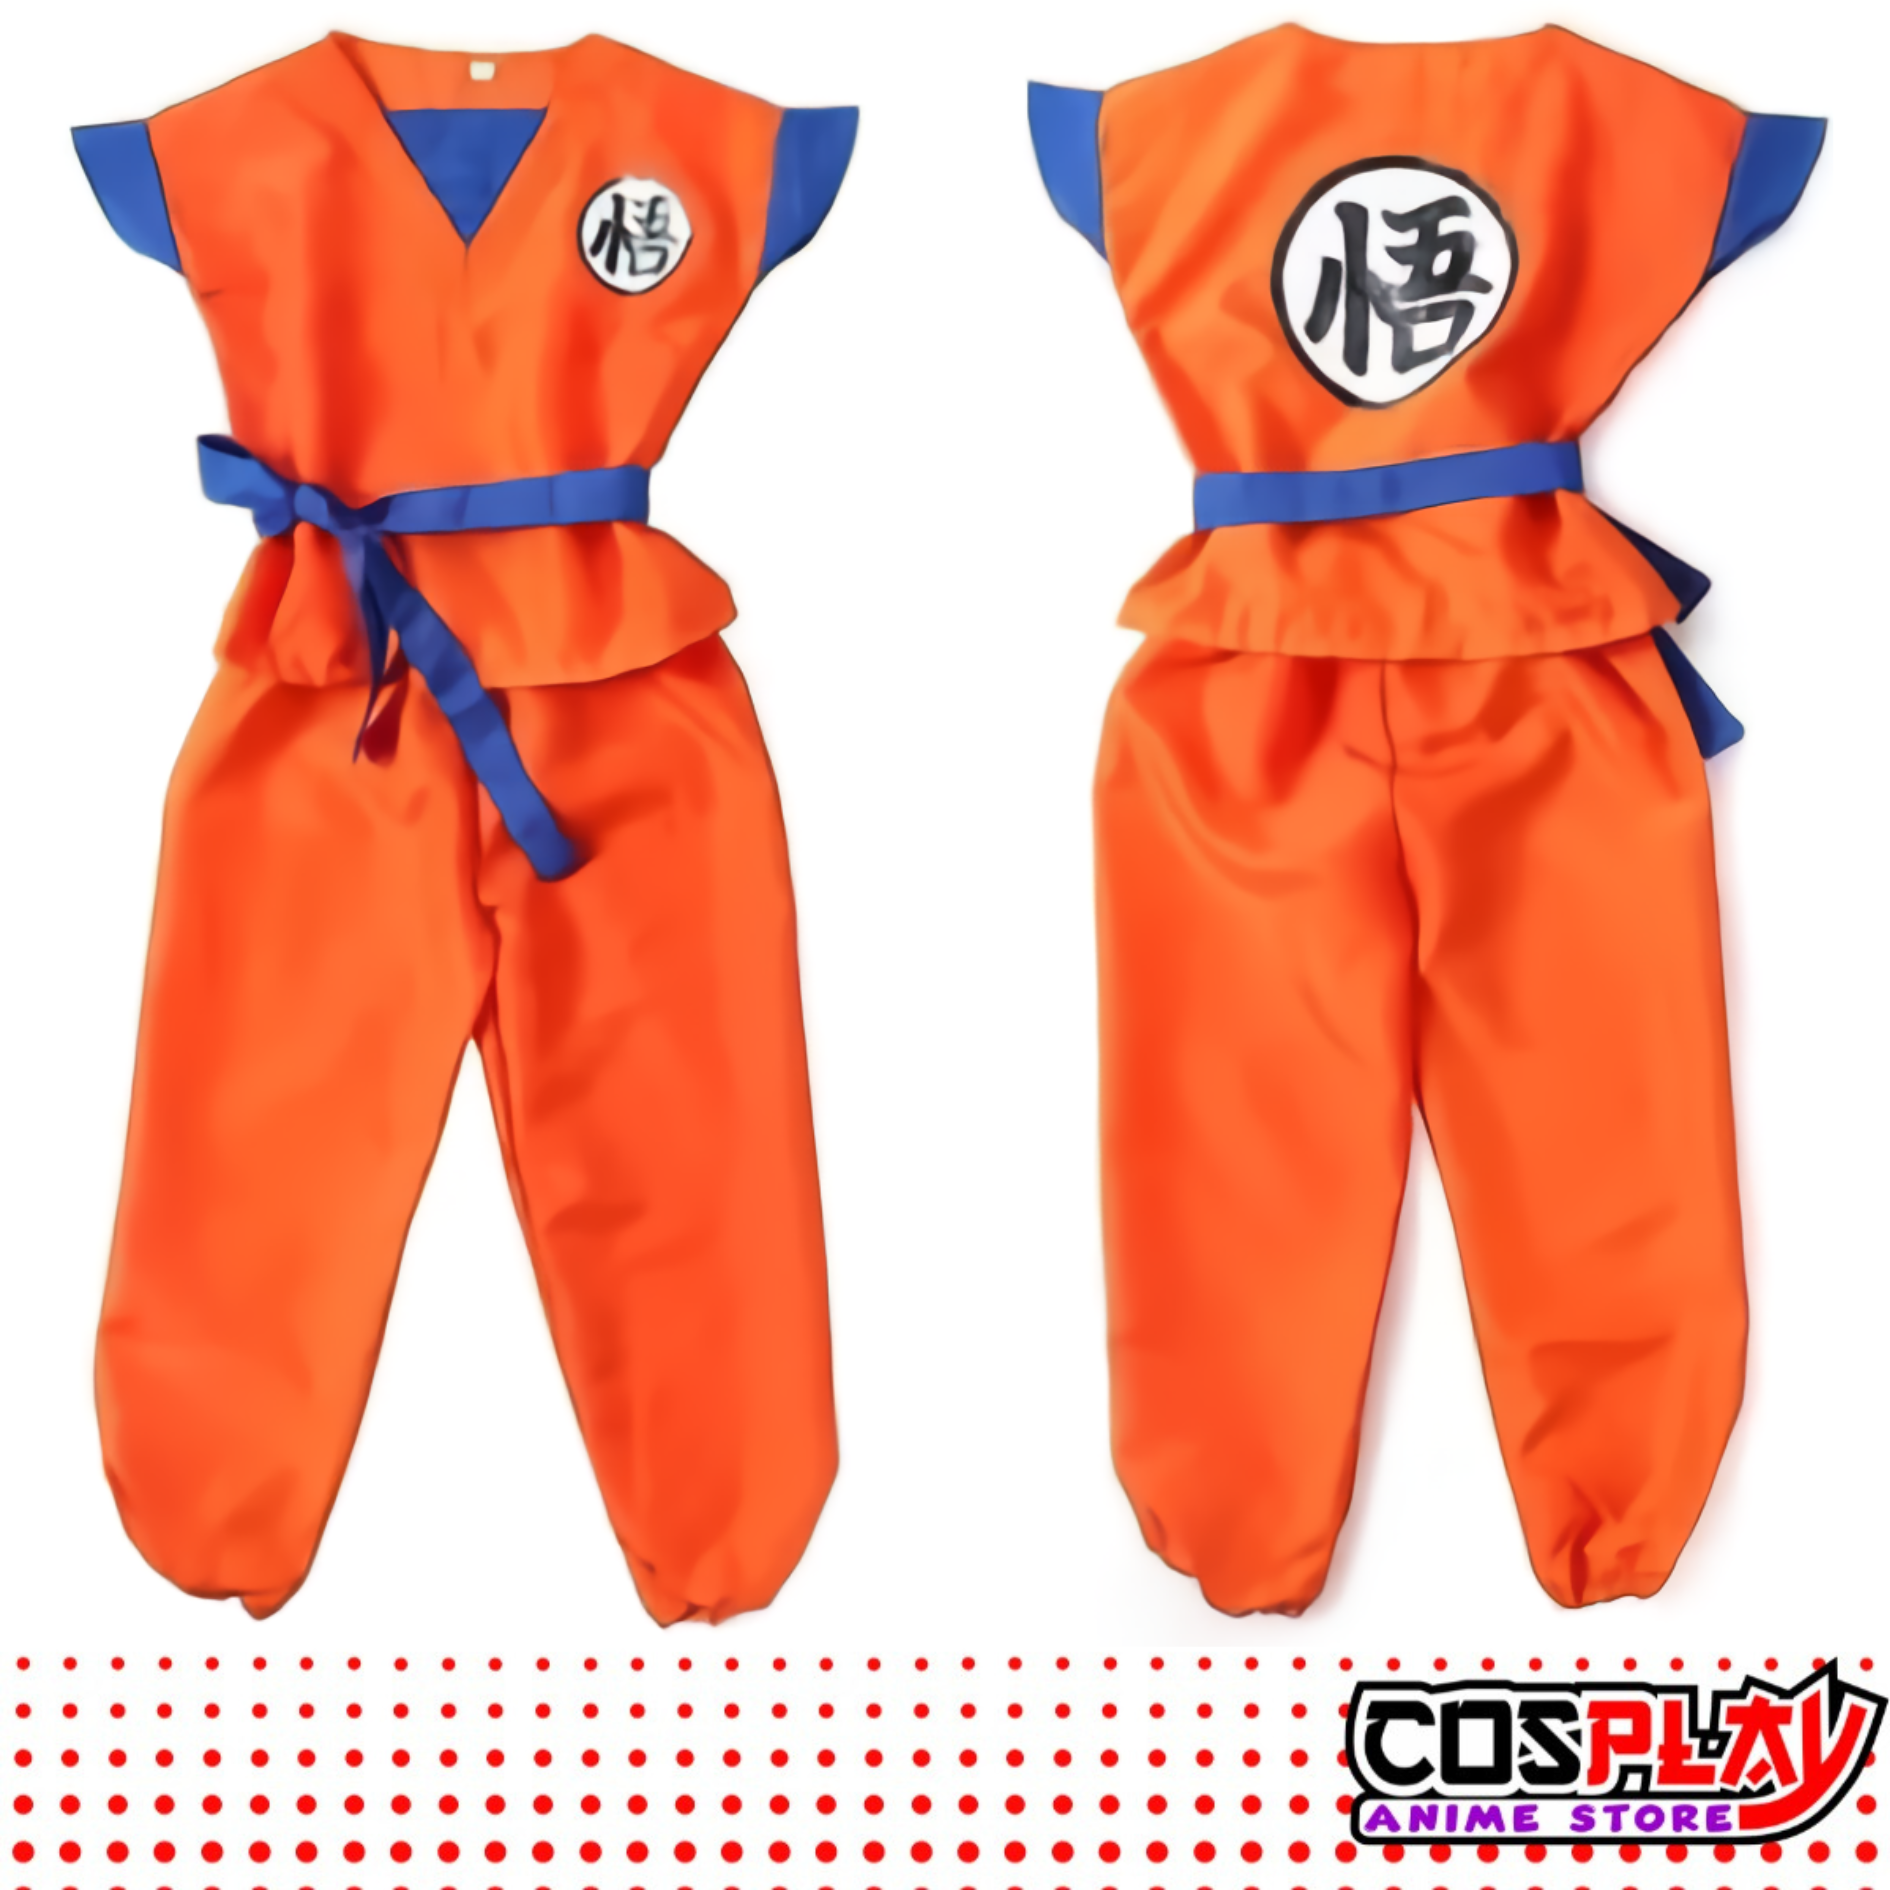 Disfraz Goku Dragon Ball Niño